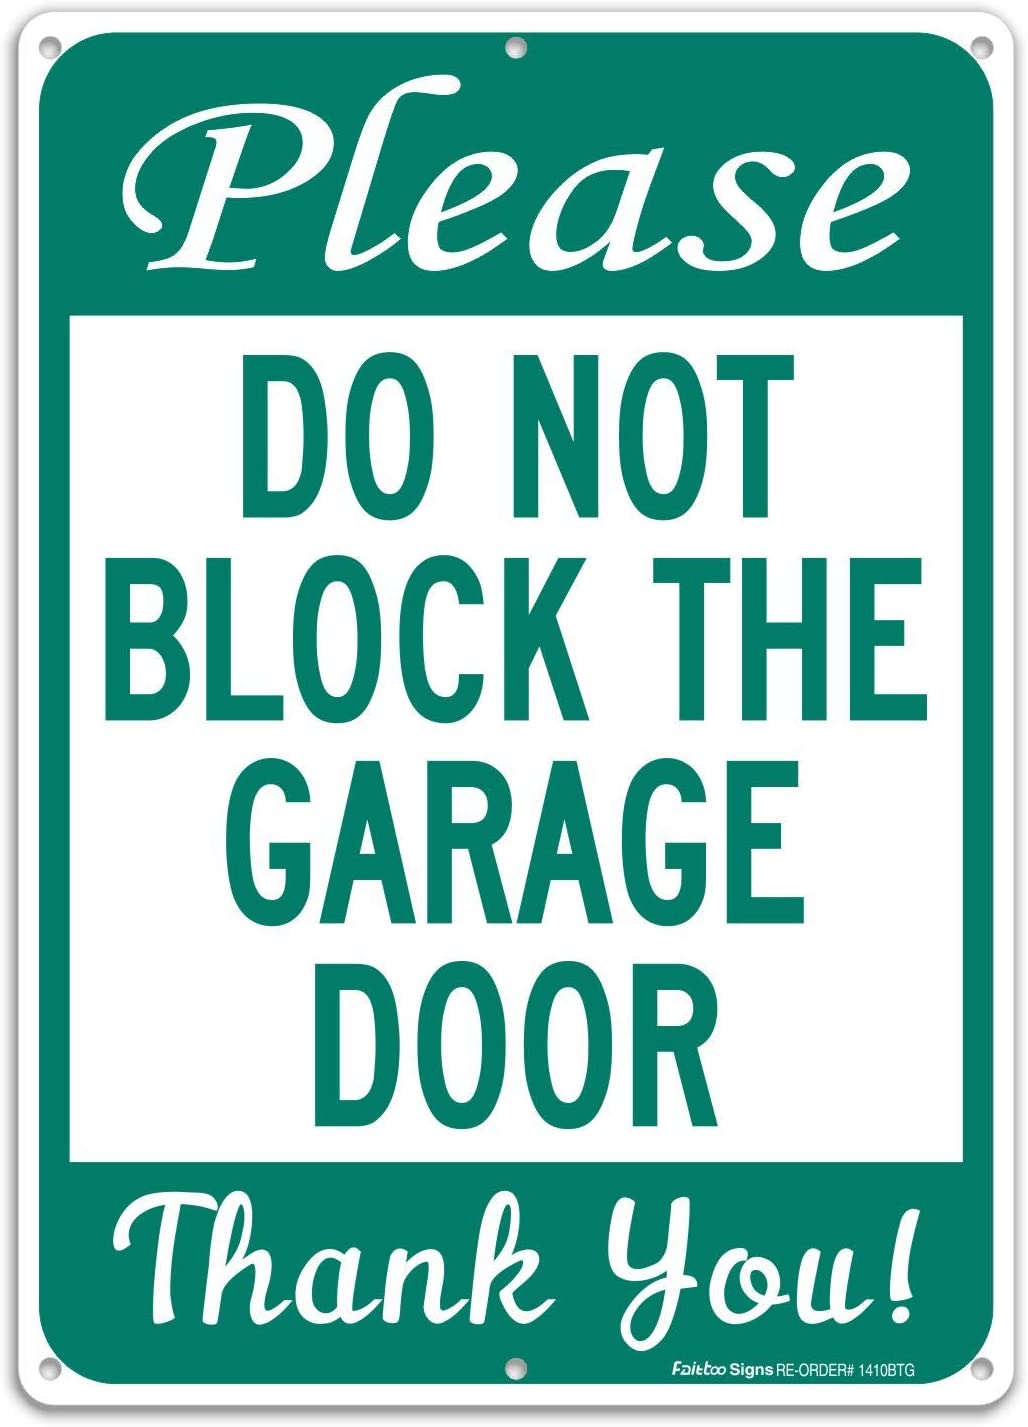 Do Not Block Garage Door Sign, No Parking Sign, 14 x 10 Inches .040 Rust-Free Aluminum, UV Protected, Weather Resistant, Waterproof, Durable Ink, Easy to Mount